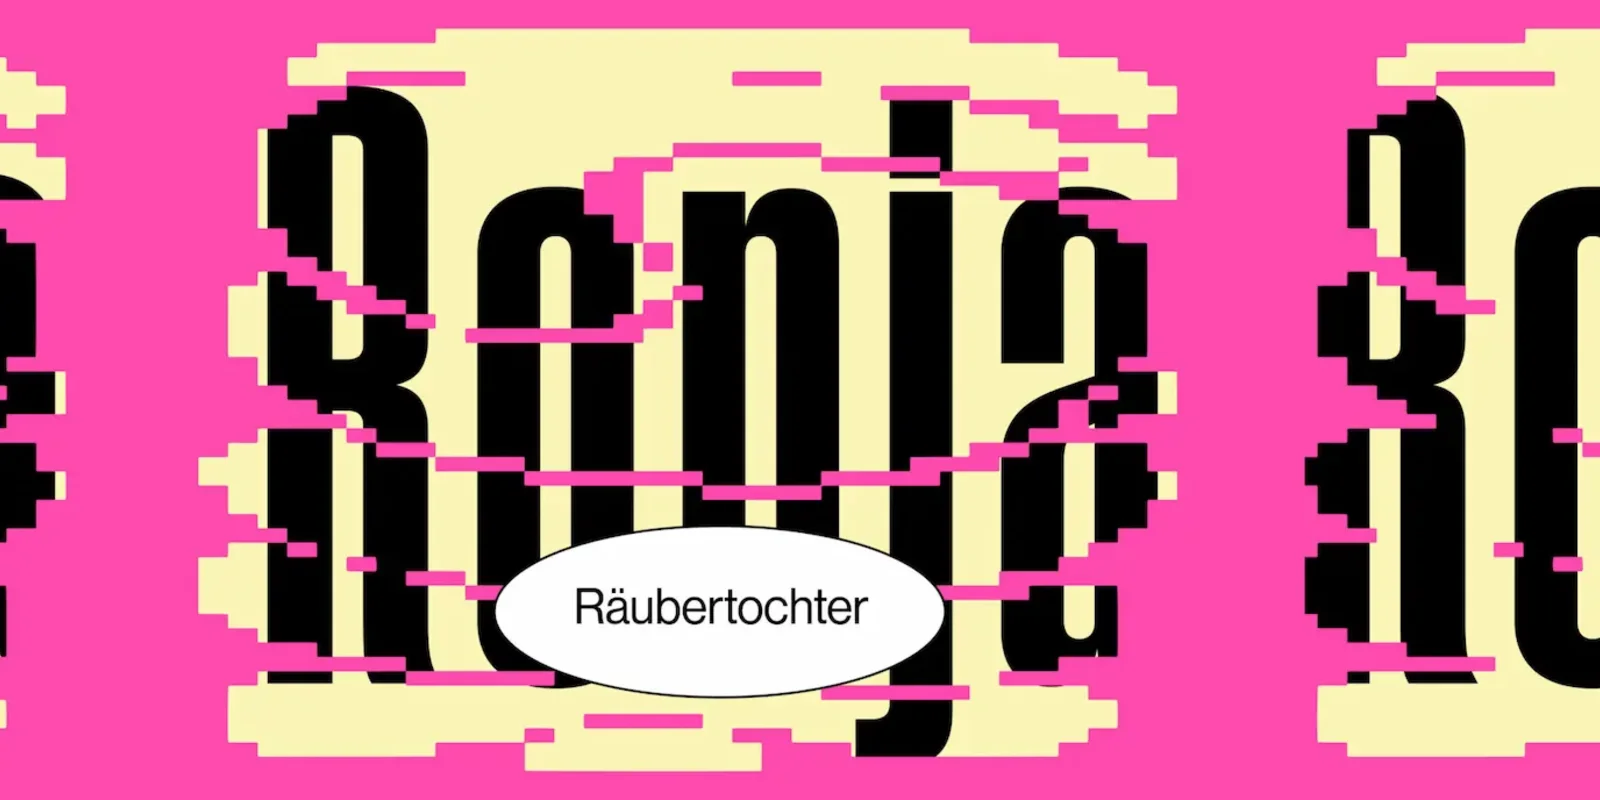 Abstraktes Bild mit Text "Ronja Räubertochter"